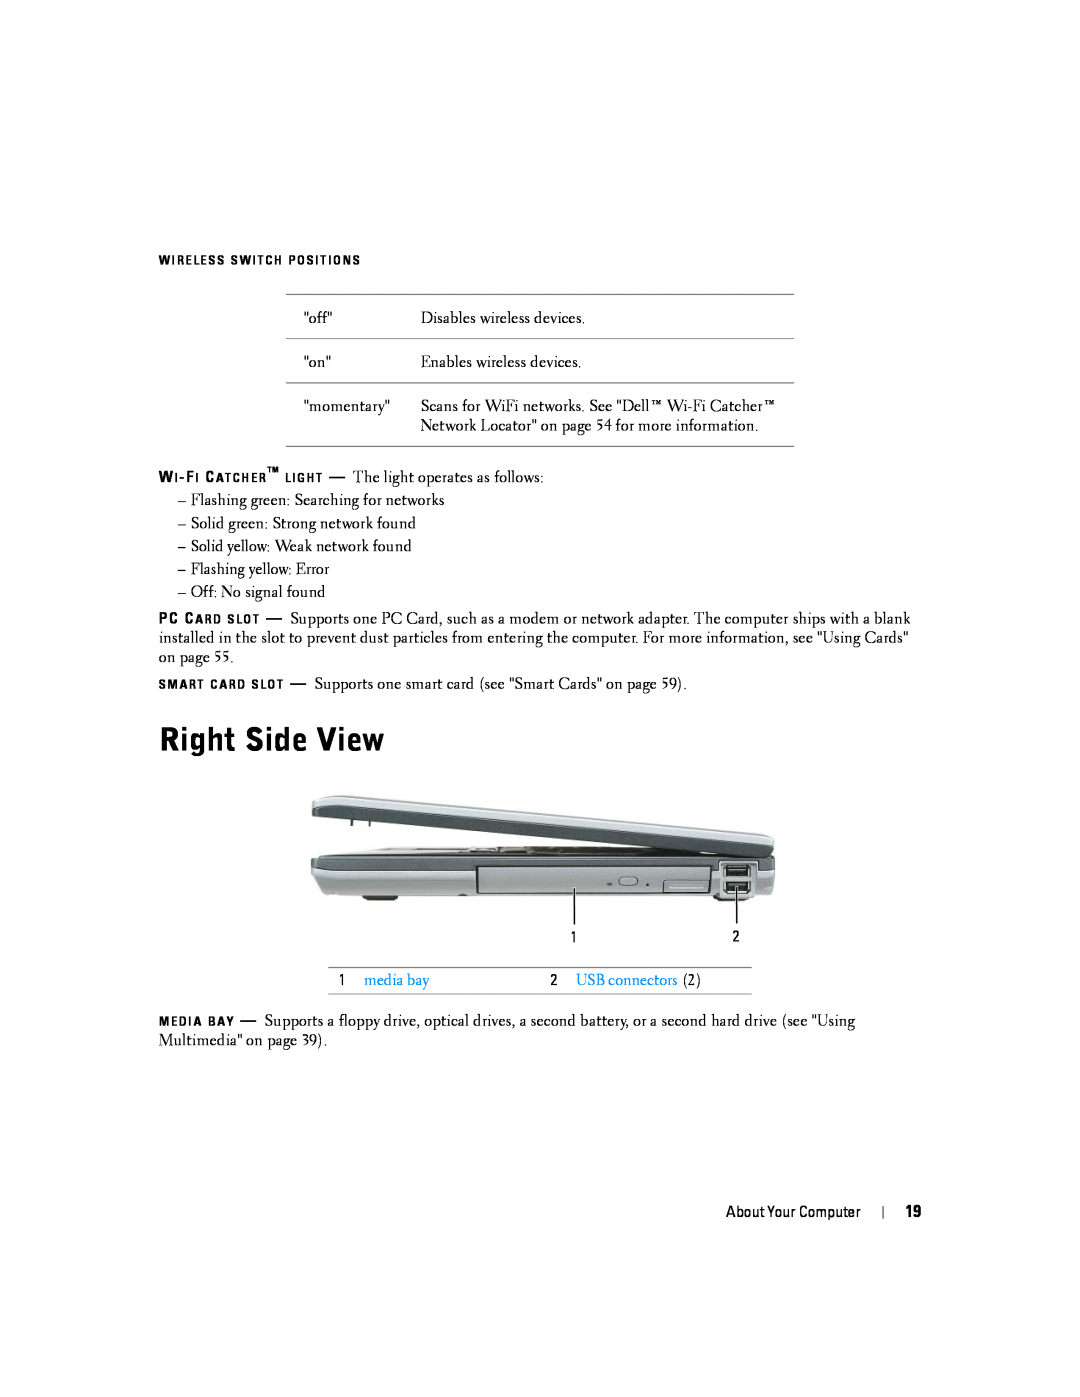 Dell D830, PP04X manual Right Side View, media bay, USB connectors 